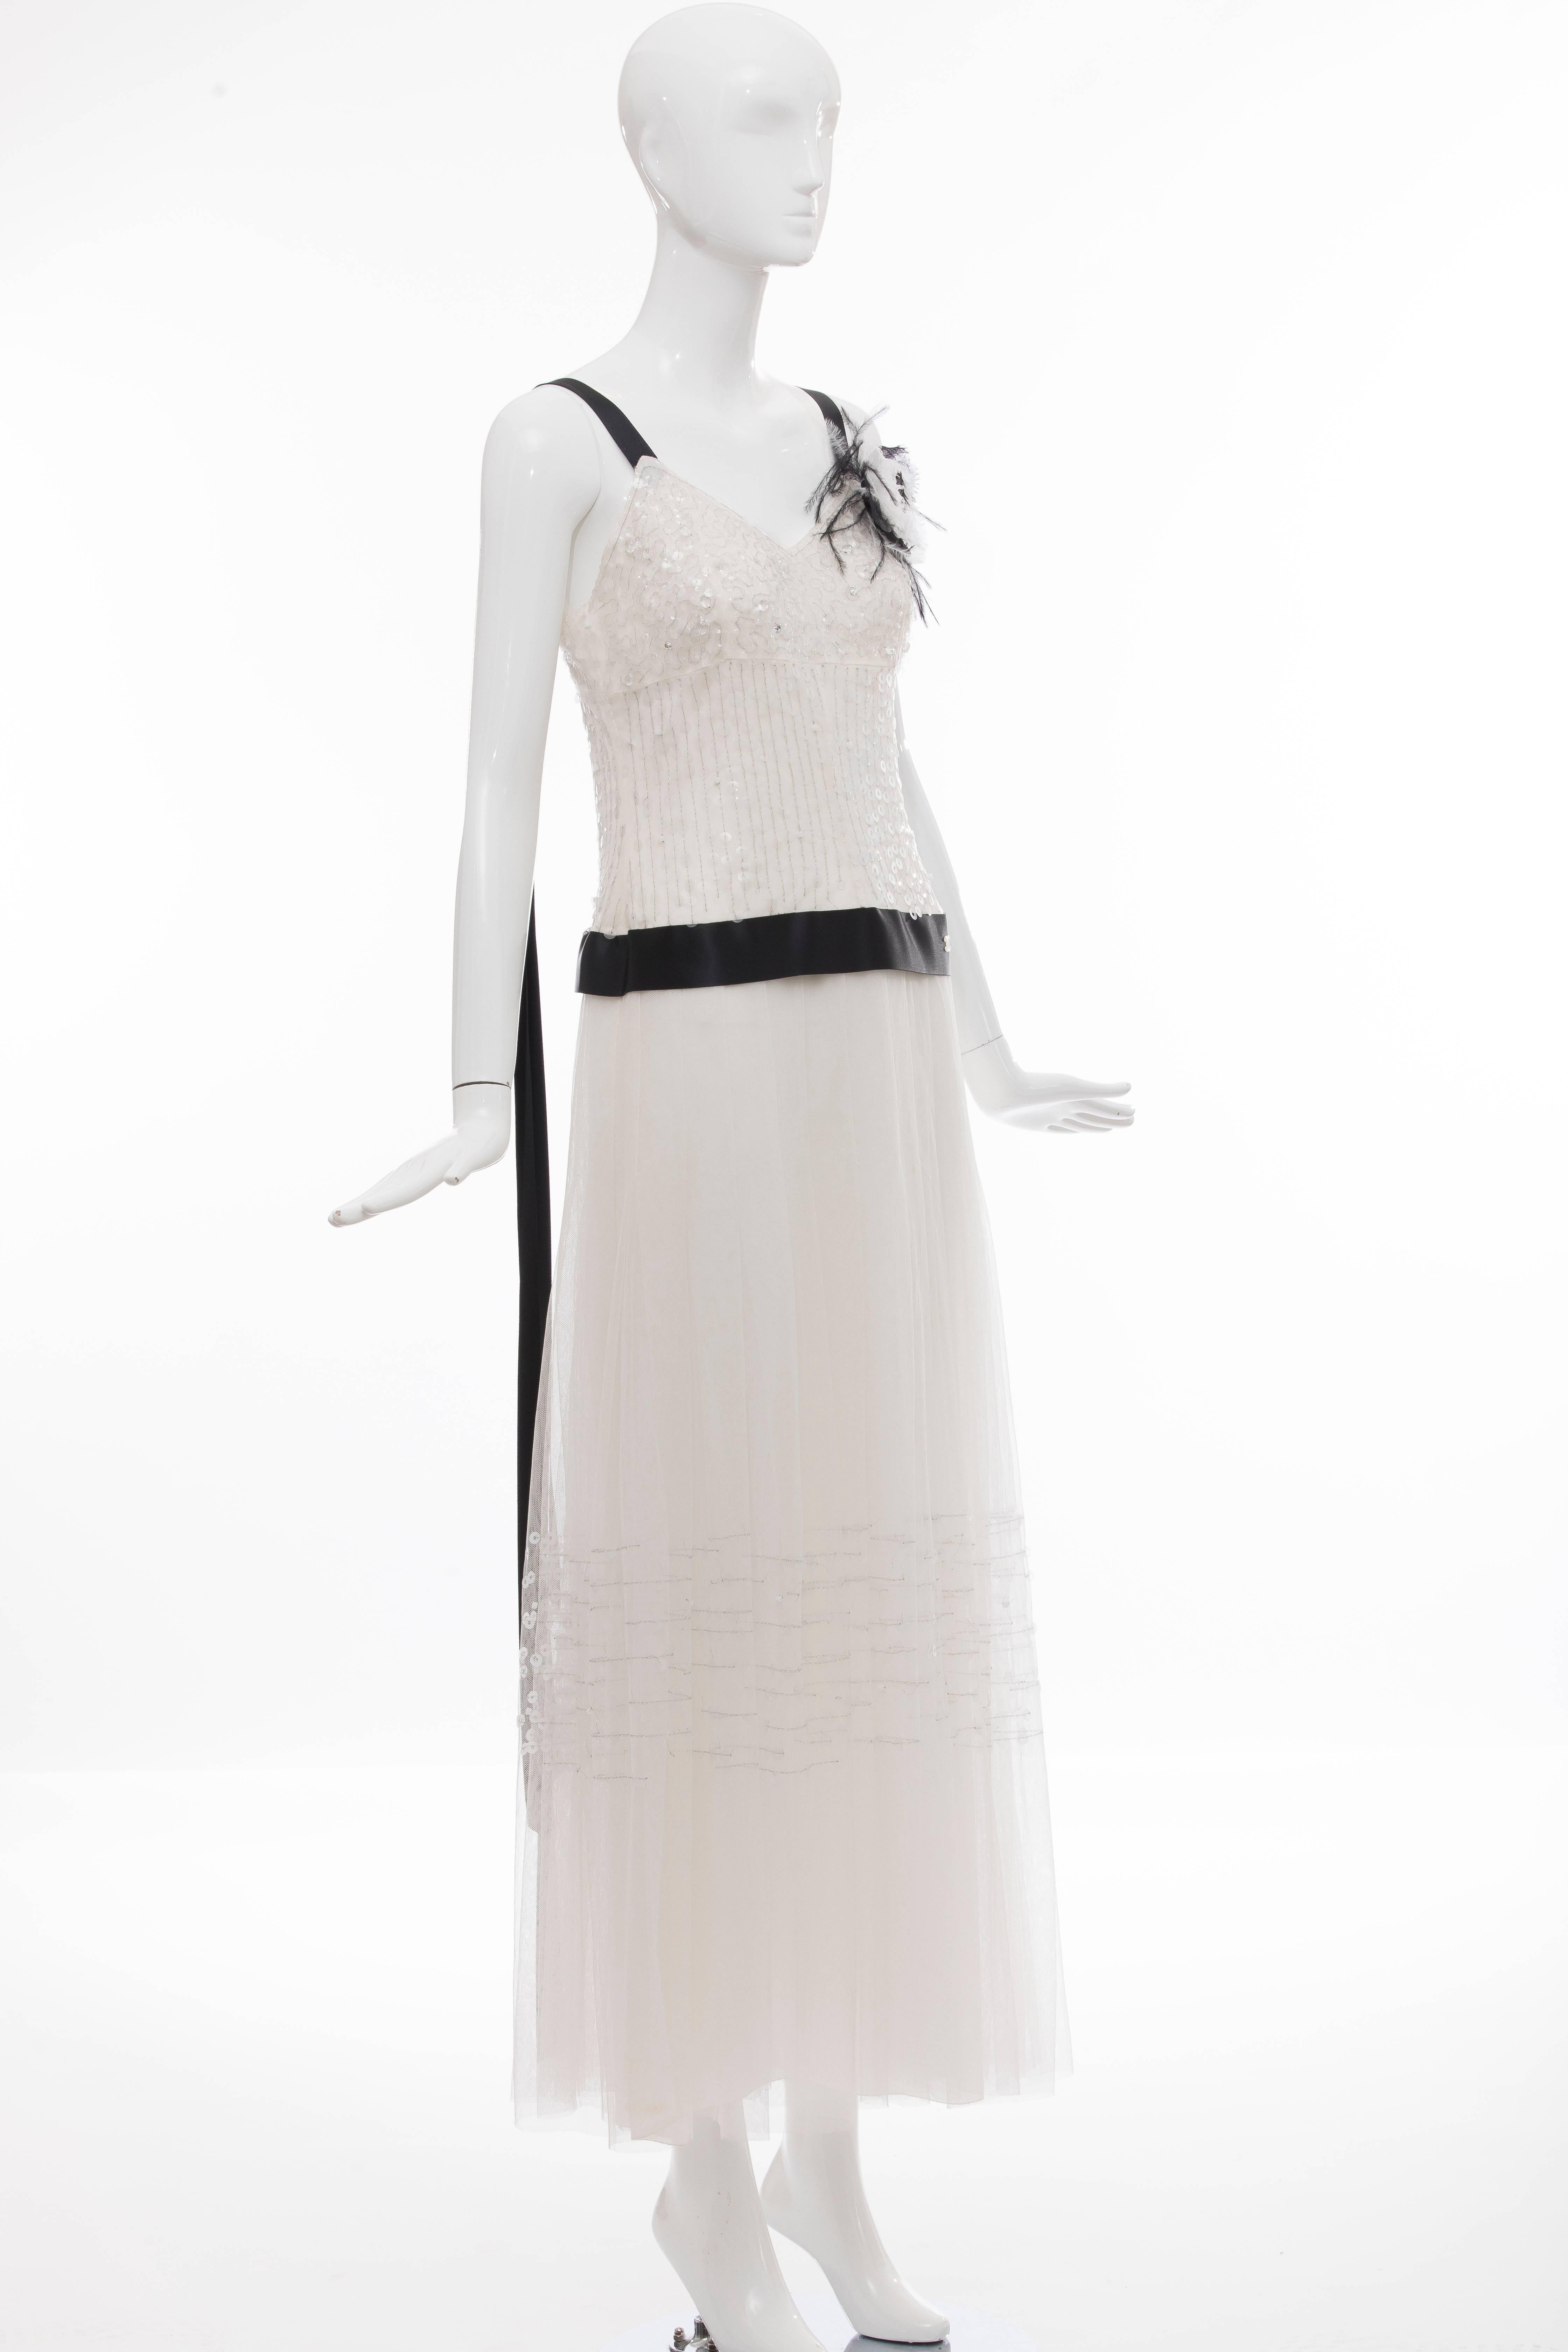 Chanel White Nylon Mesh Sequins Pearls Black Satin Evening Dress, Cruise 2005 1